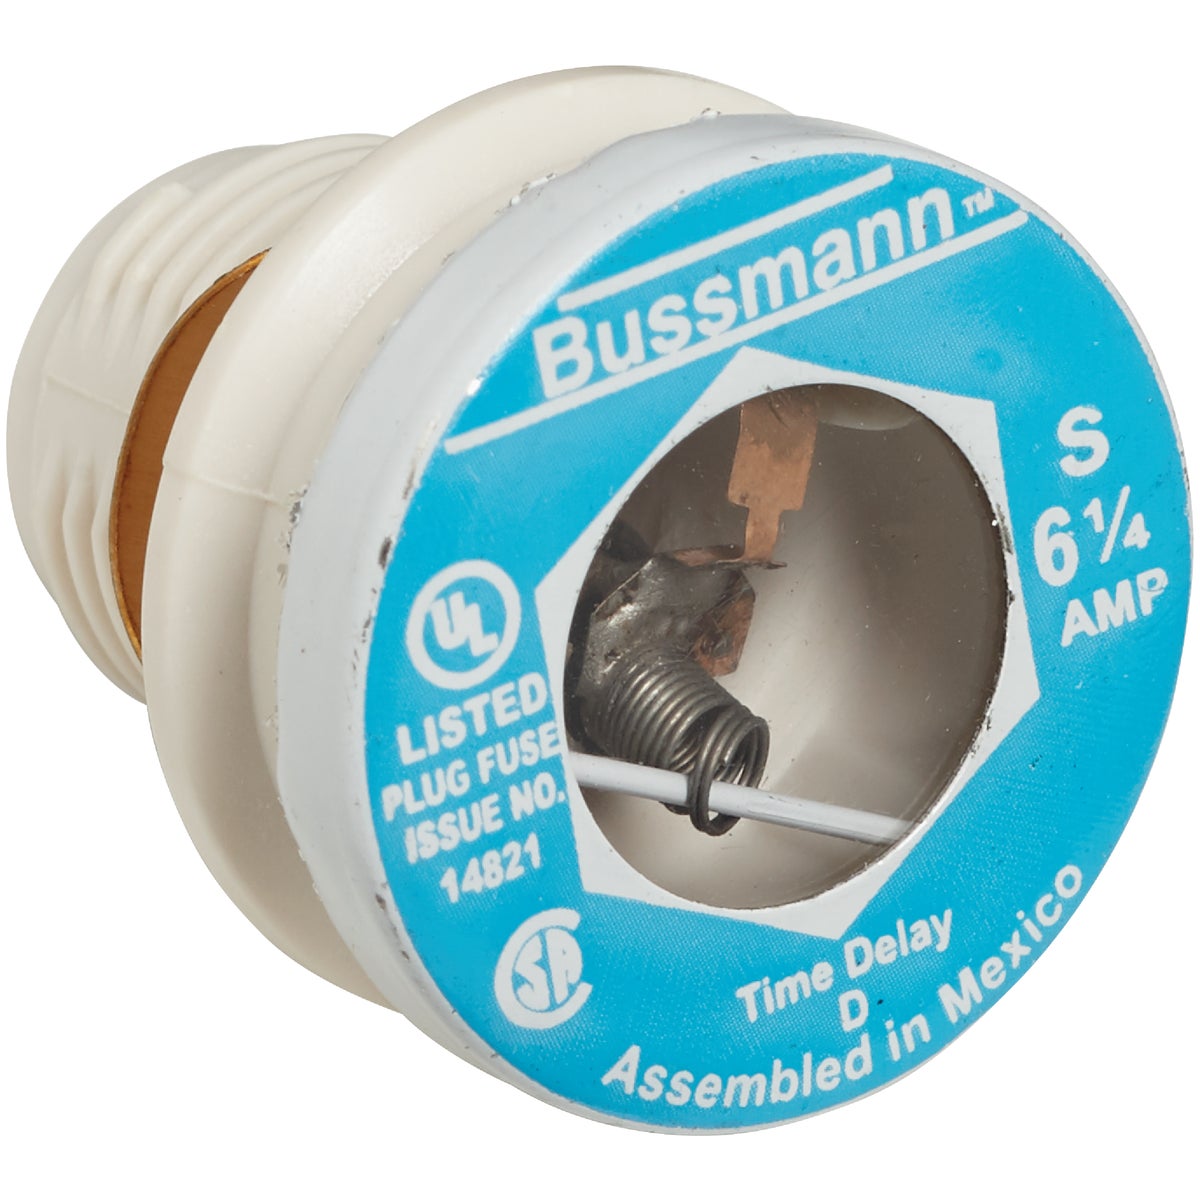 Bussmann 6-1/4A BP/S Time-Delay Plug Fuse – Hemlock Hardware